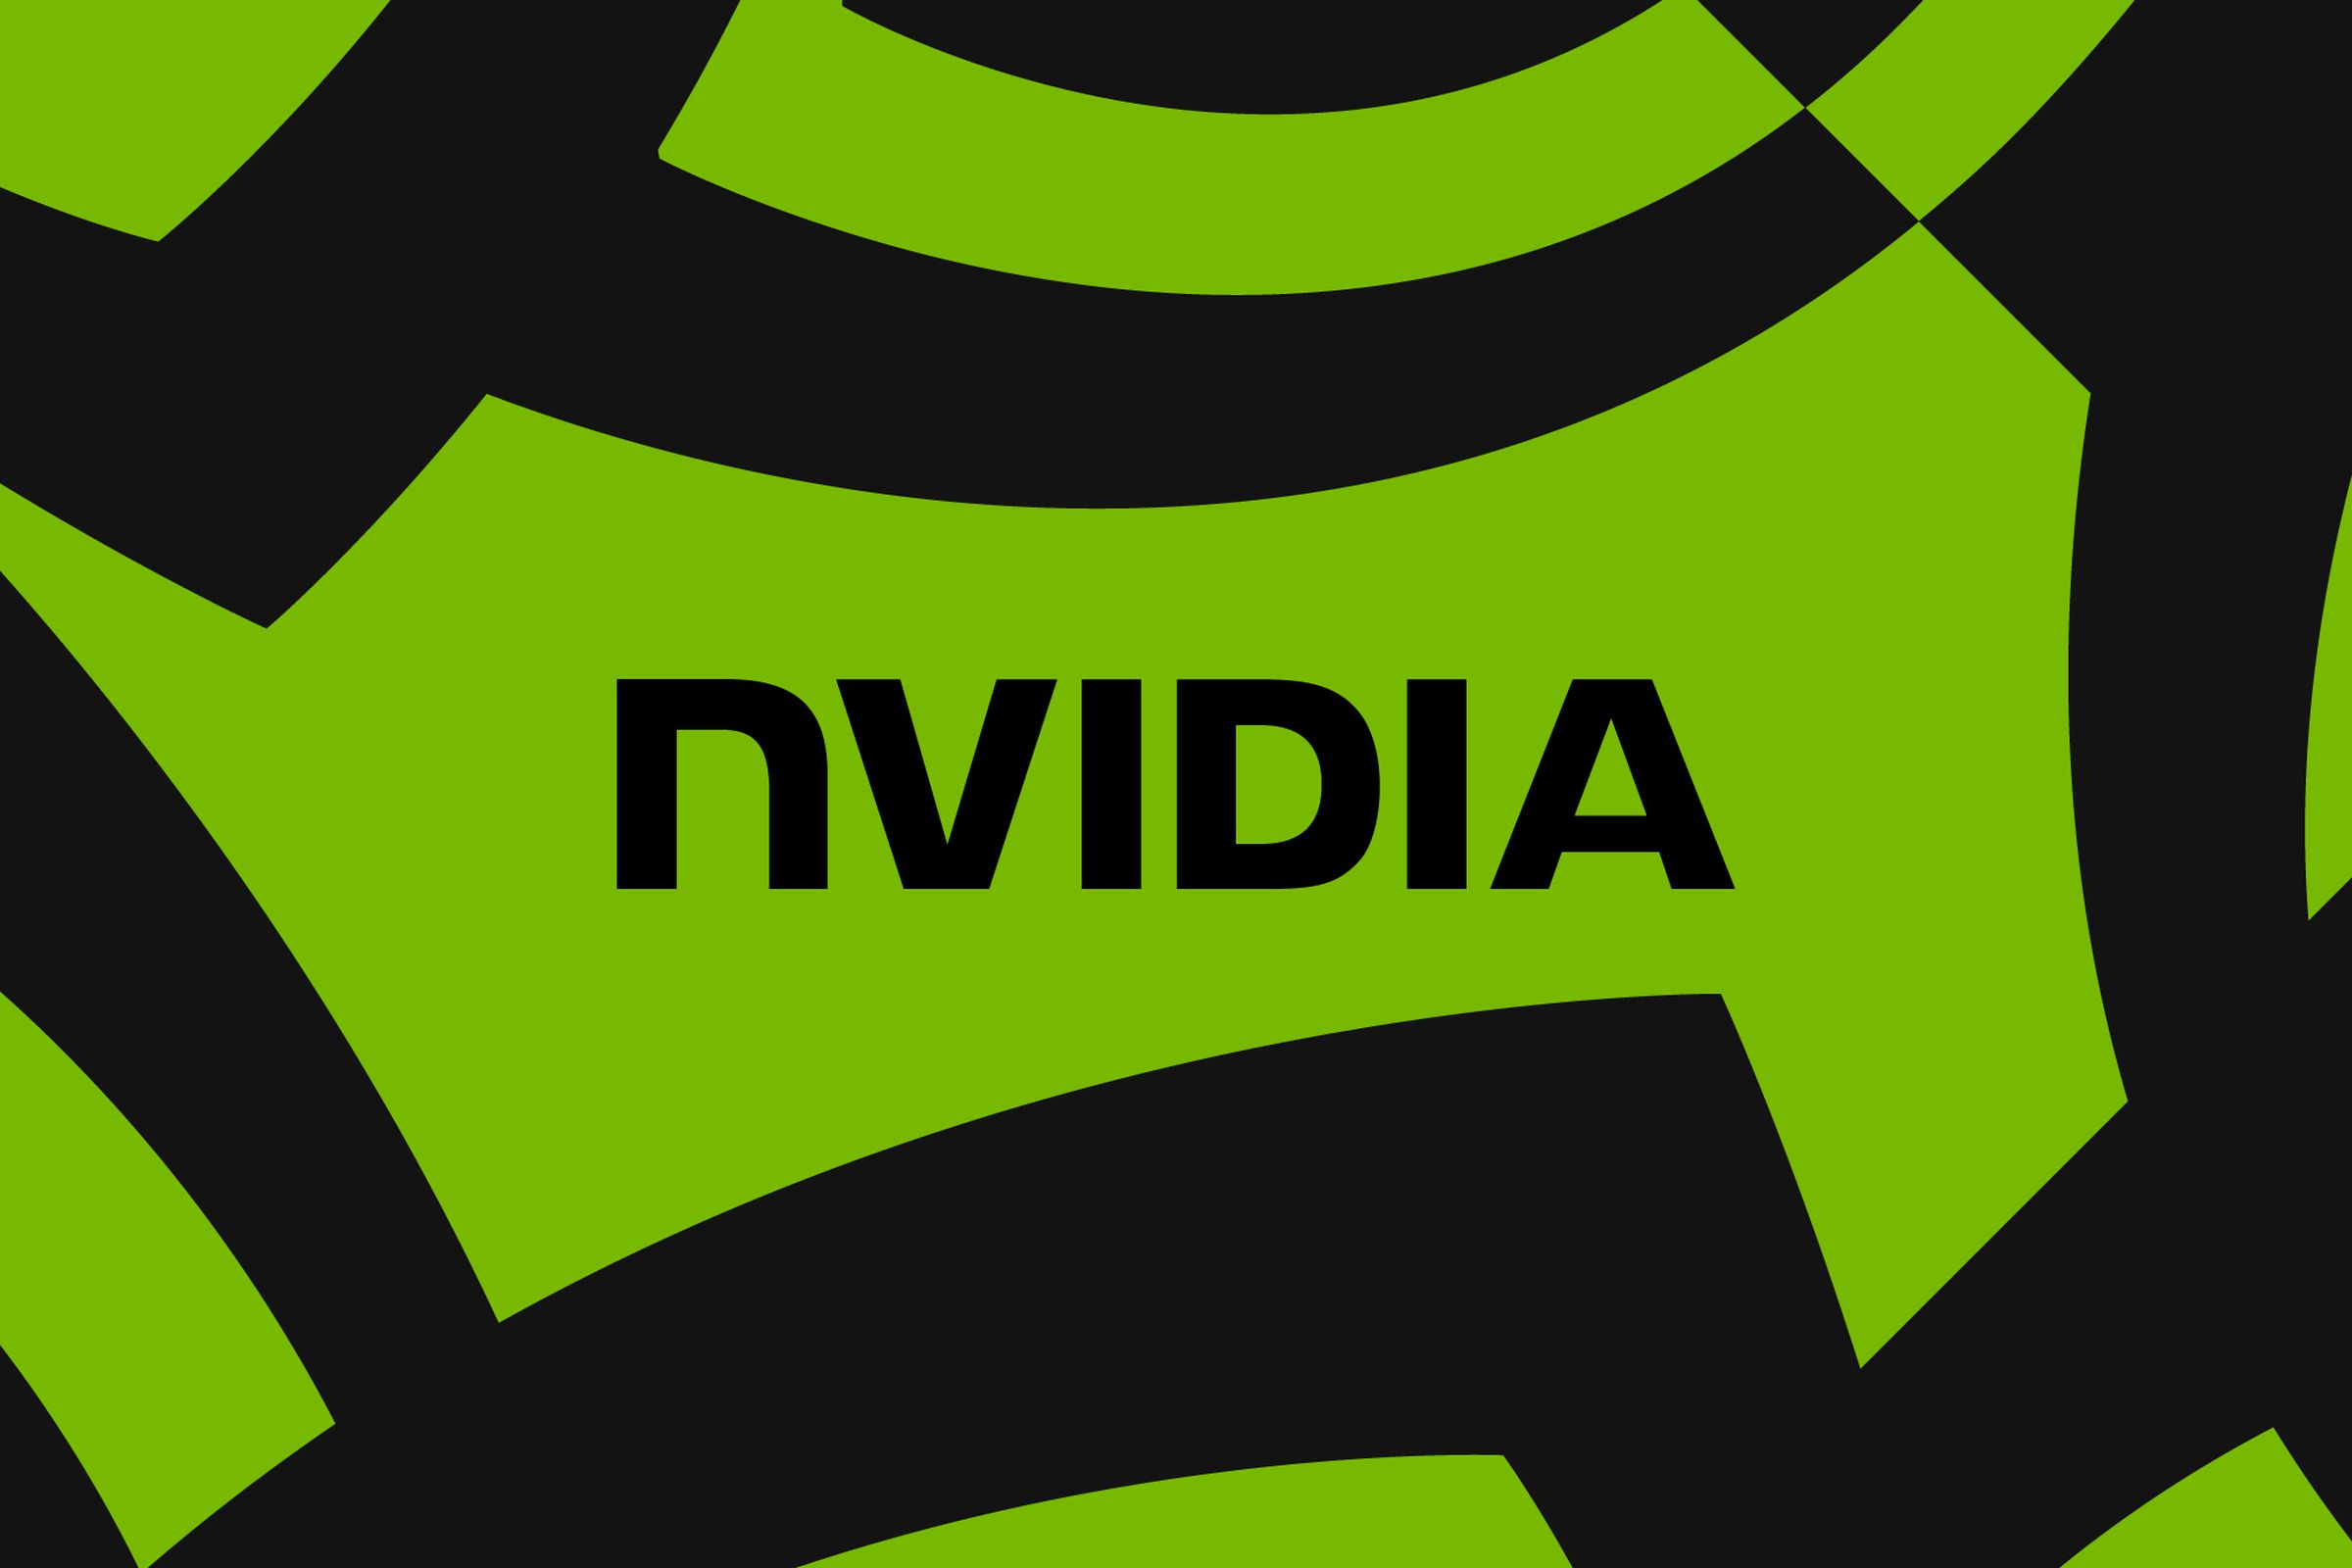 Illustration of an Nvidia logo